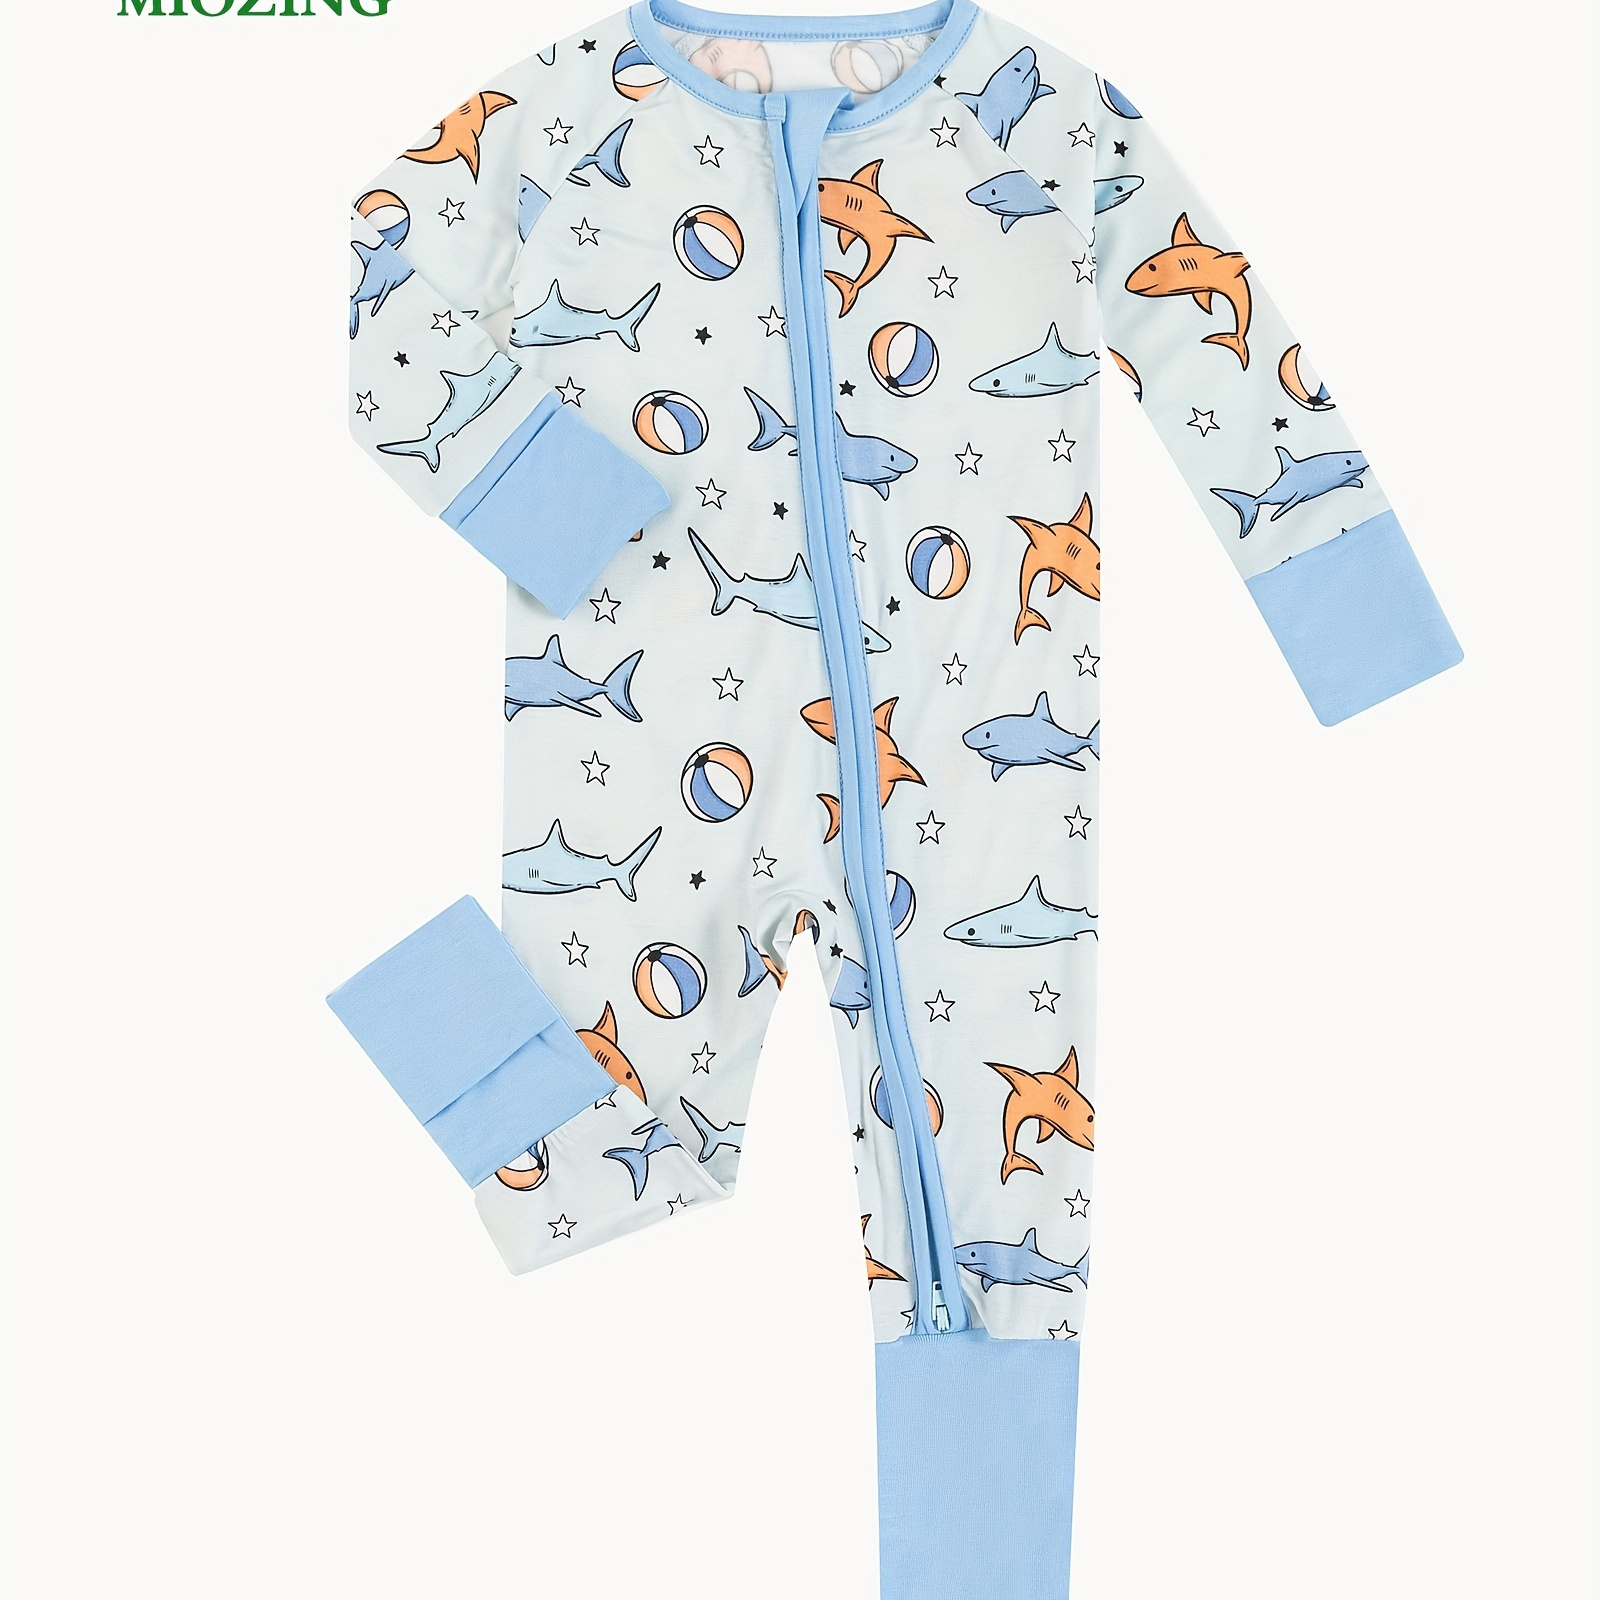 

Baby Boys Bamboo Fiber Baby Romper, Blue Cartoon Shark & Ball Print, Long Sleeve Zippered Onesie, Cute Style For Infants